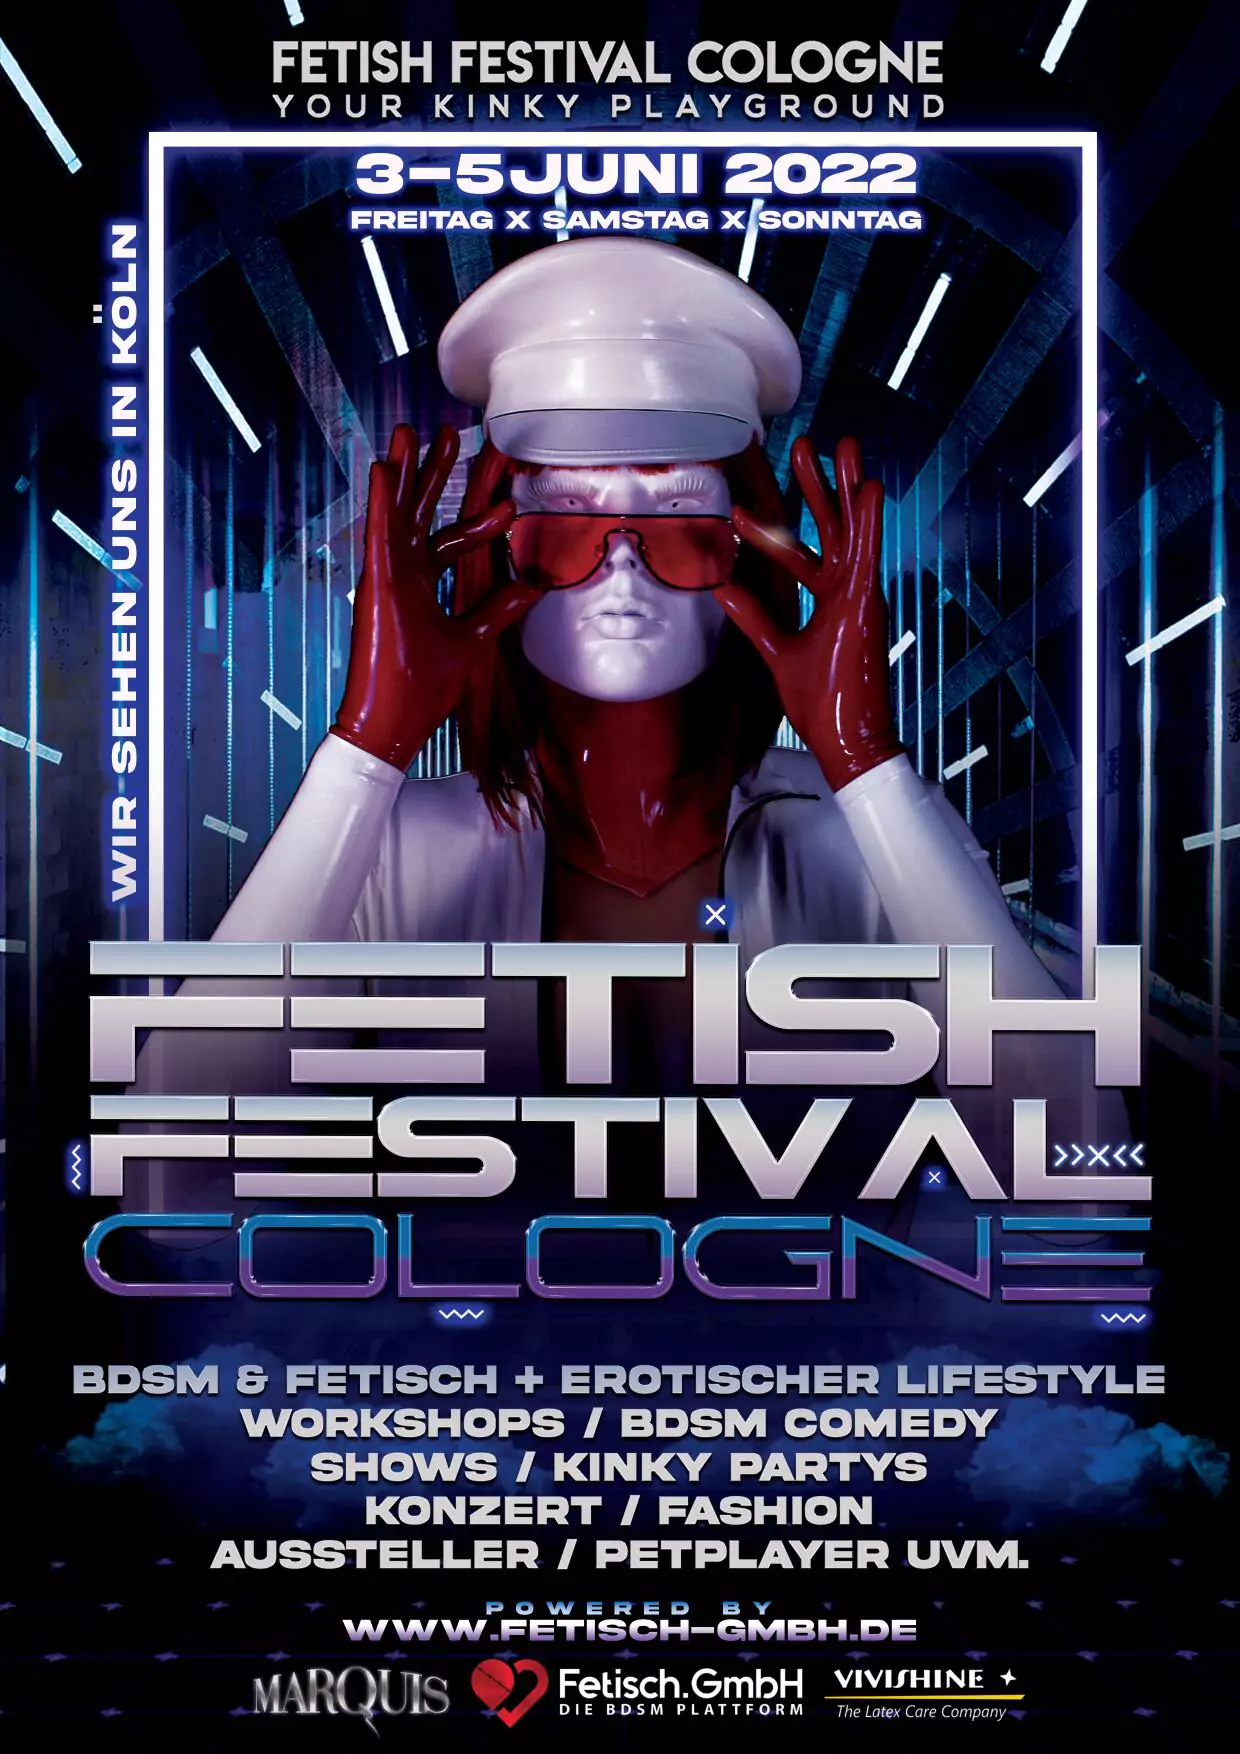 Event: Fetish Festival Cologne 2022